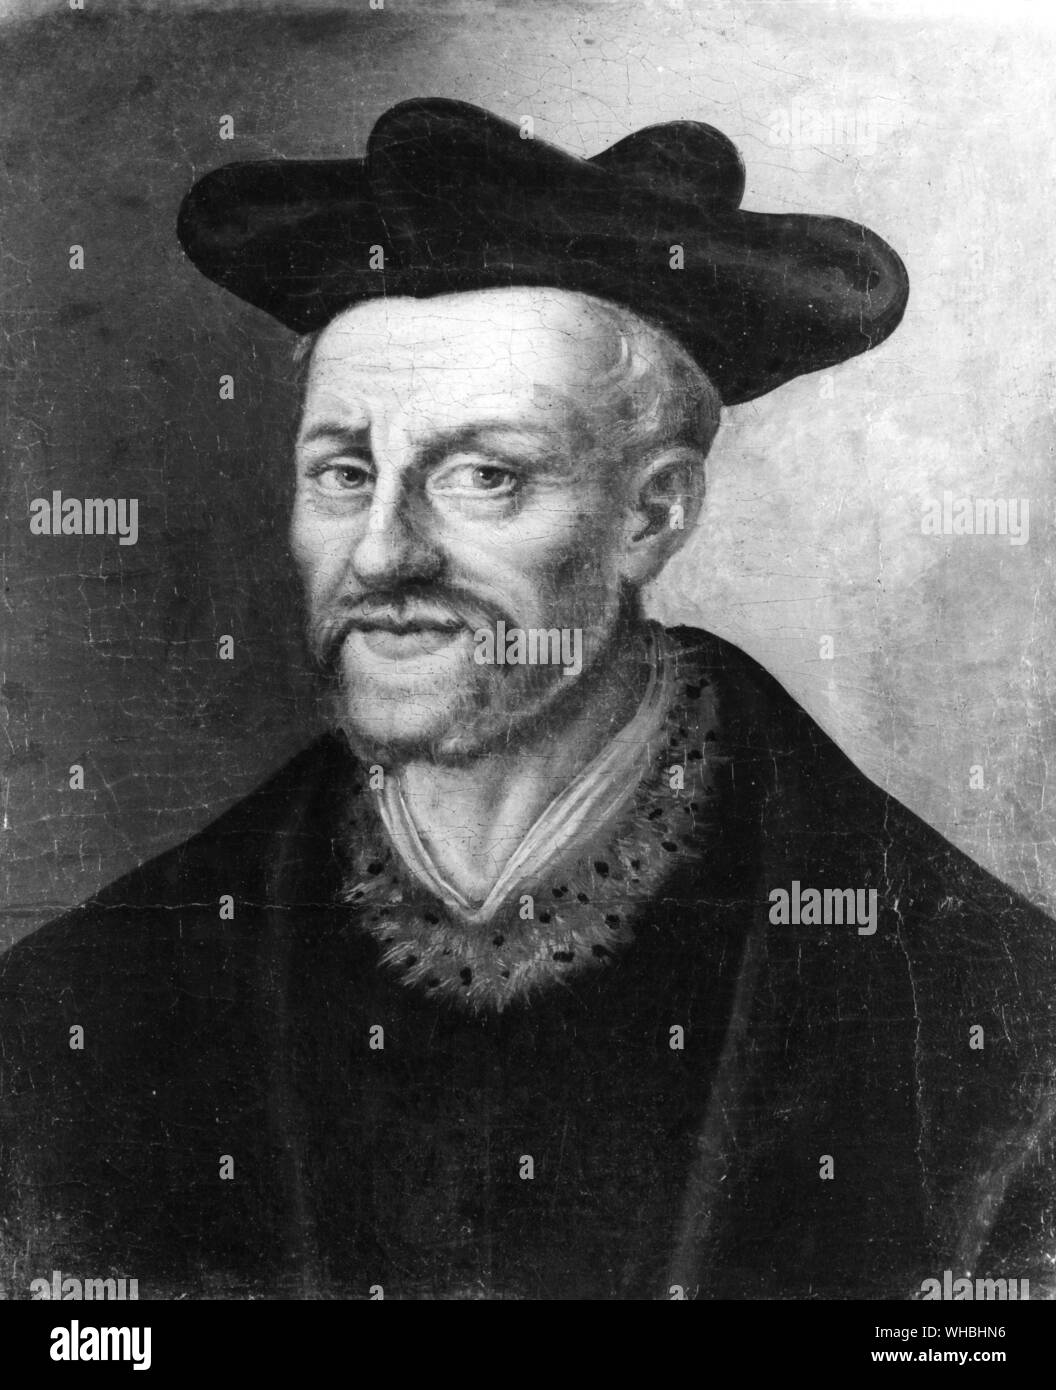 Francois Rabelais. François Rabelais (c. 1494 - Aprile 9, 1553) è stato un grande Rinascimento francese scrittore, medico e umanista rinascimentale Foto Stock